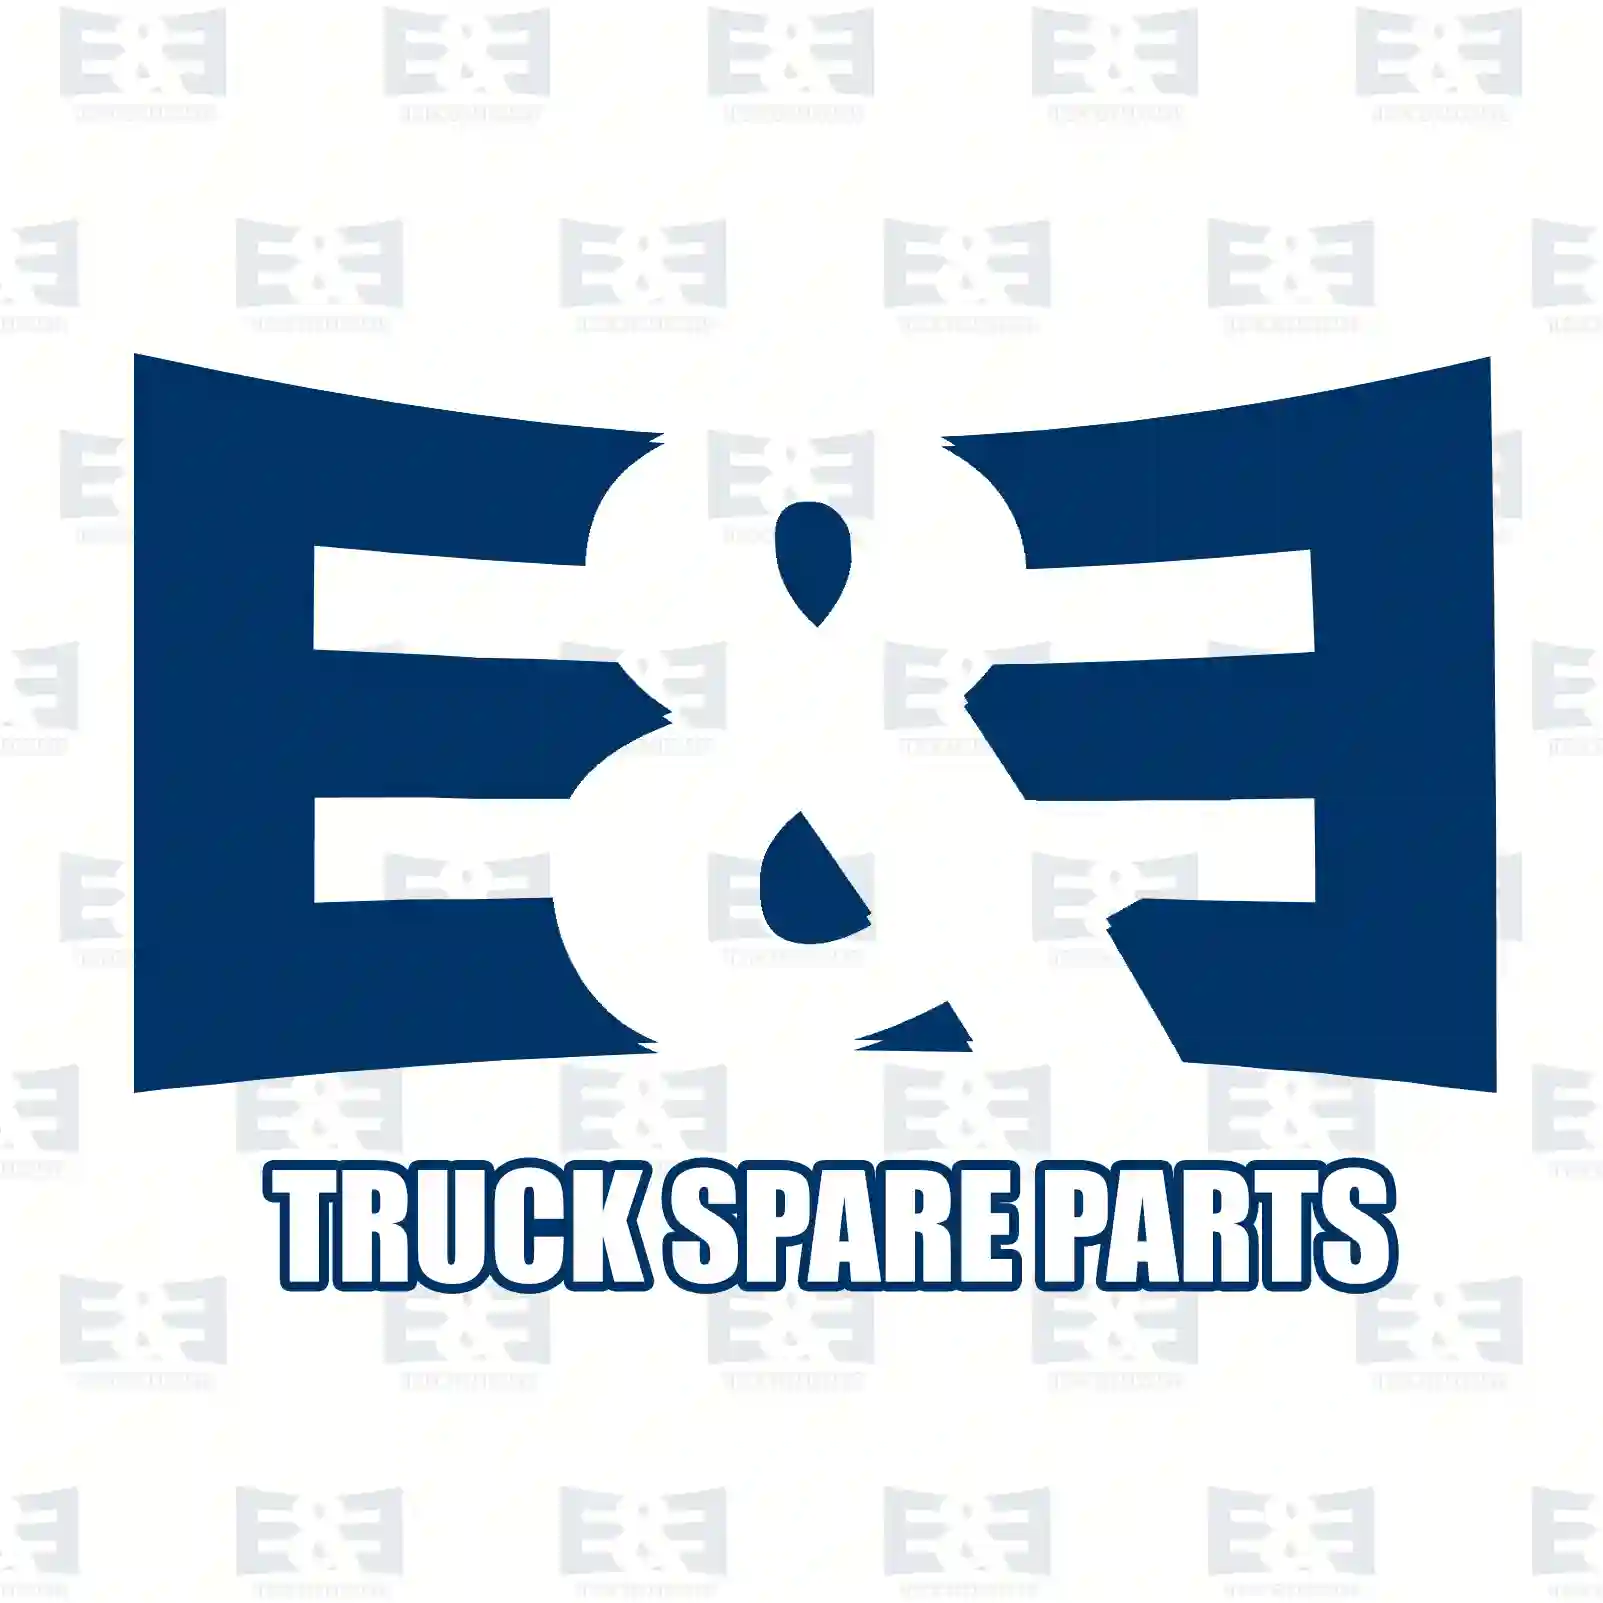 Drum brake lining kit, axle kit, 2E2294912, 1535247, 1535247S, 551122, 551136, 551160, 551191, 552110 ||  2E2294912 E&E Truck Spare Parts | Truck Spare Parts, Auotomotive Spare Parts Drum brake lining kit, axle kit, 2E2294912, 1535247, 1535247S, 551122, 551136, 551160, 551191, 552110 ||  2E2294912 E&E Truck Spare Parts | Truck Spare Parts, Auotomotive Spare Parts